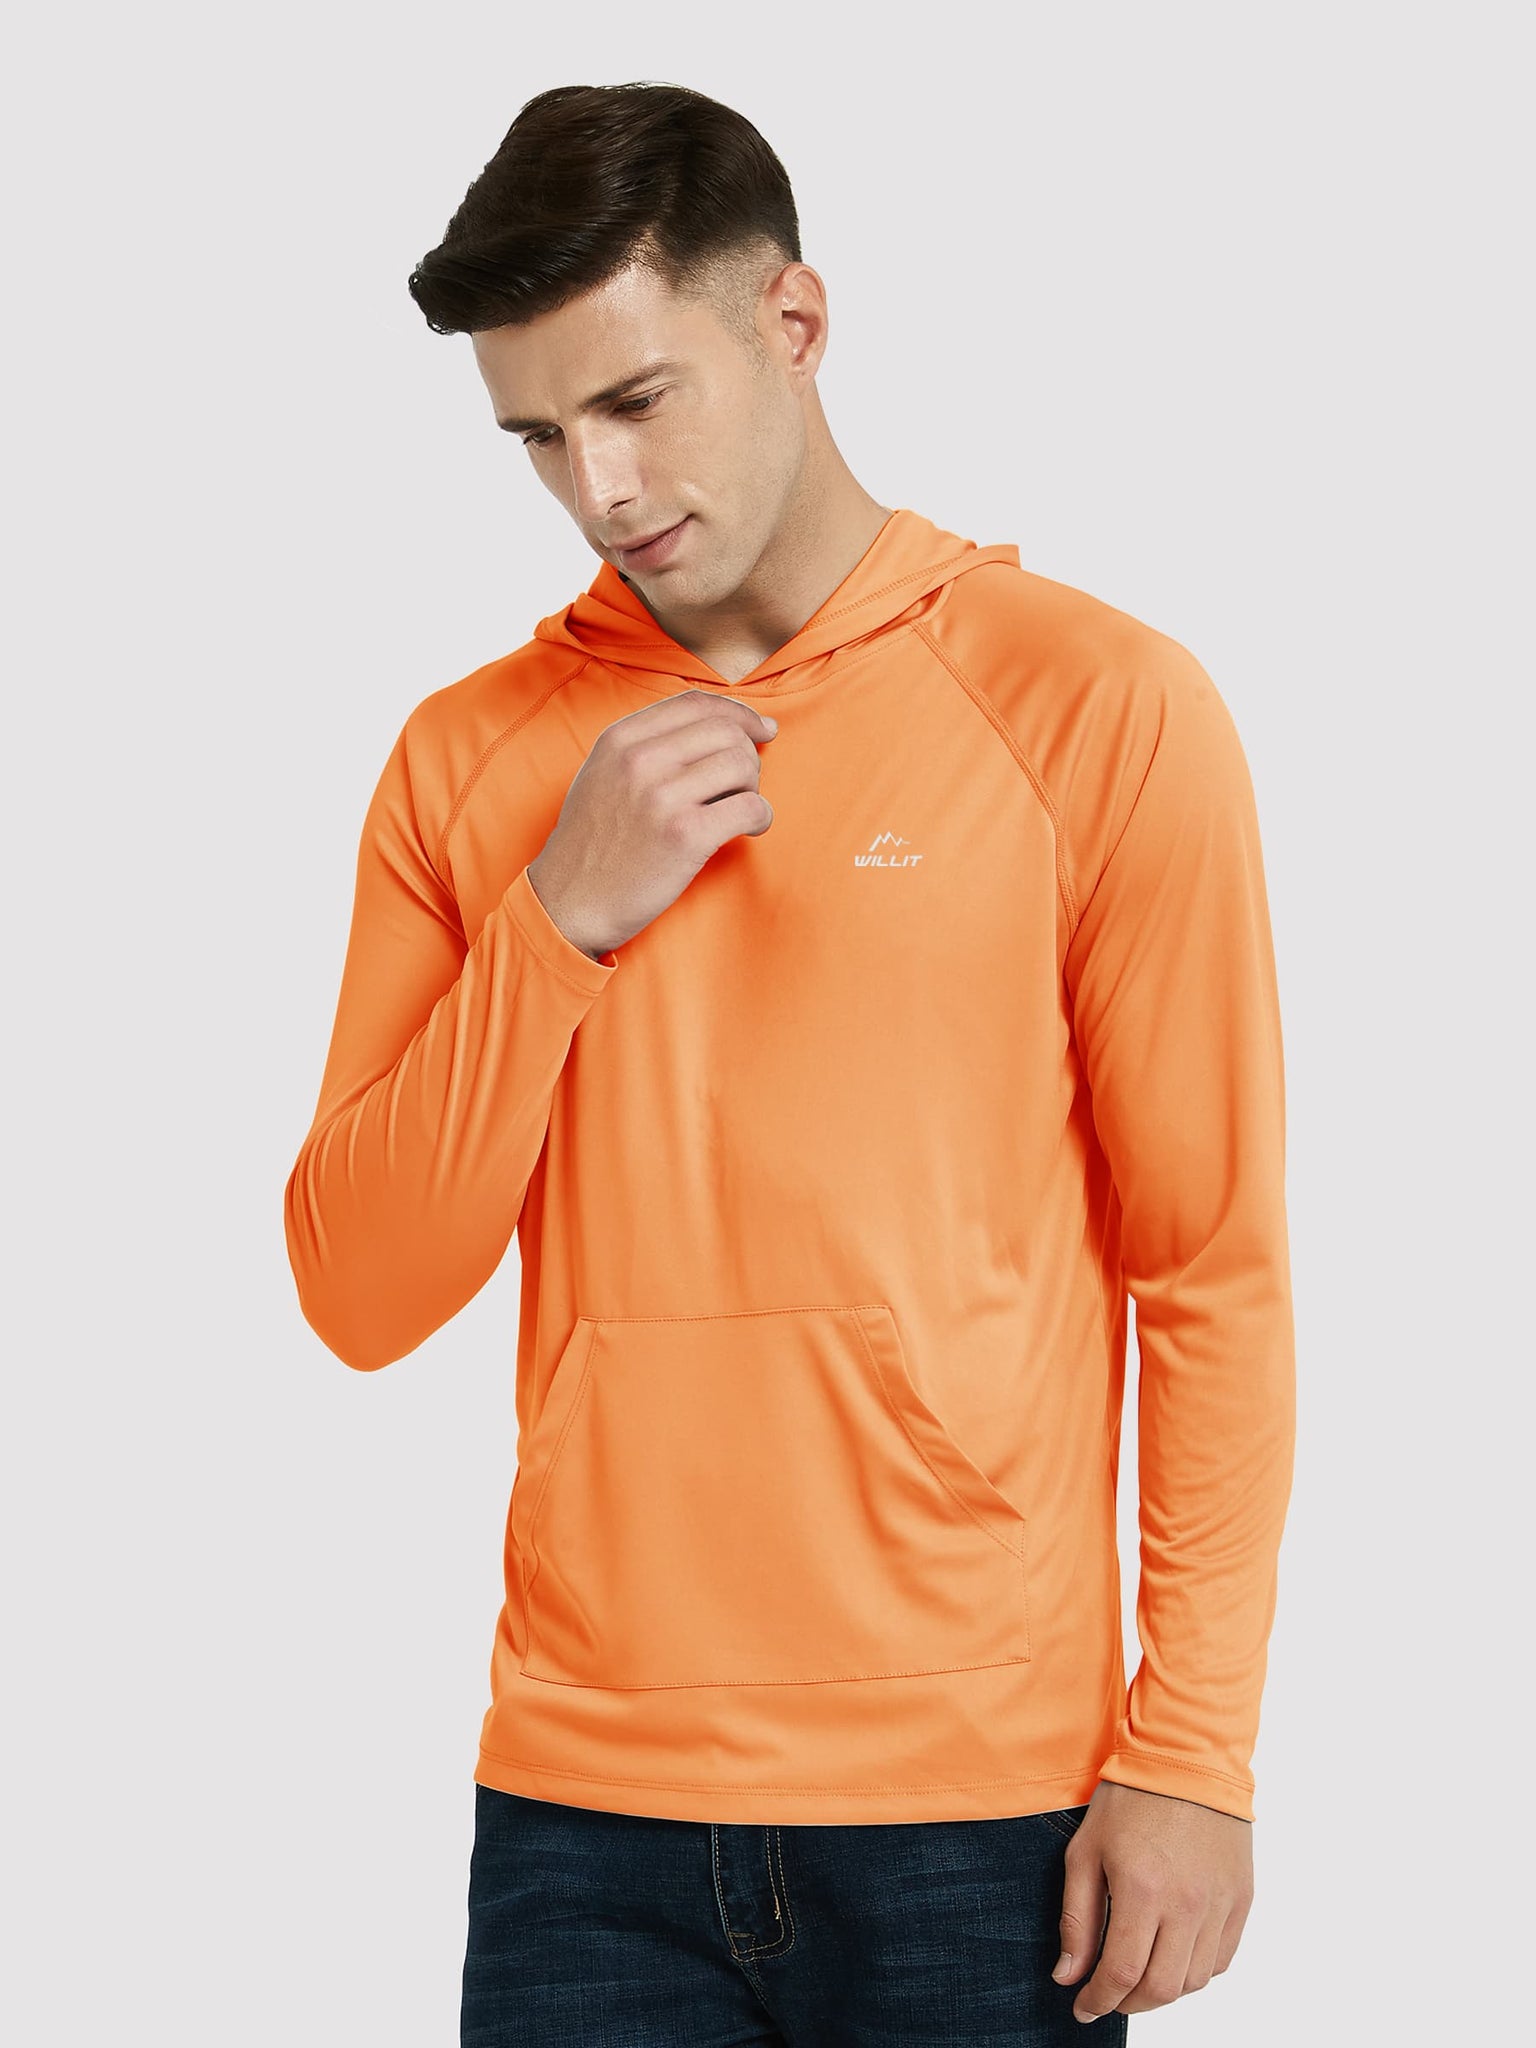 Men's Sun Protection Long Sleeve Shirts_Orange_model1